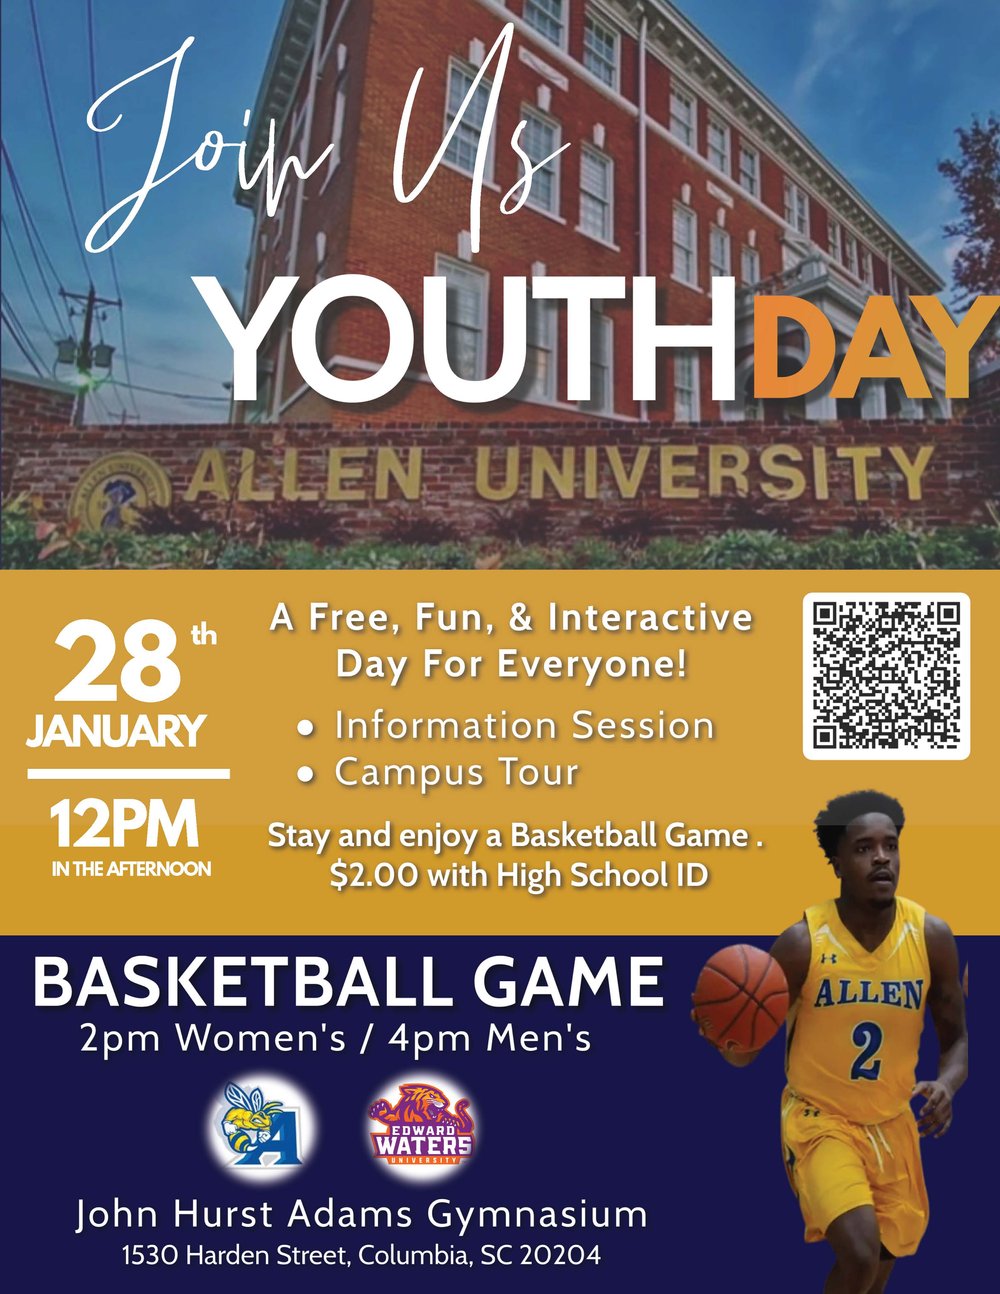 Allen University Youth Day Jan. 28, 2023